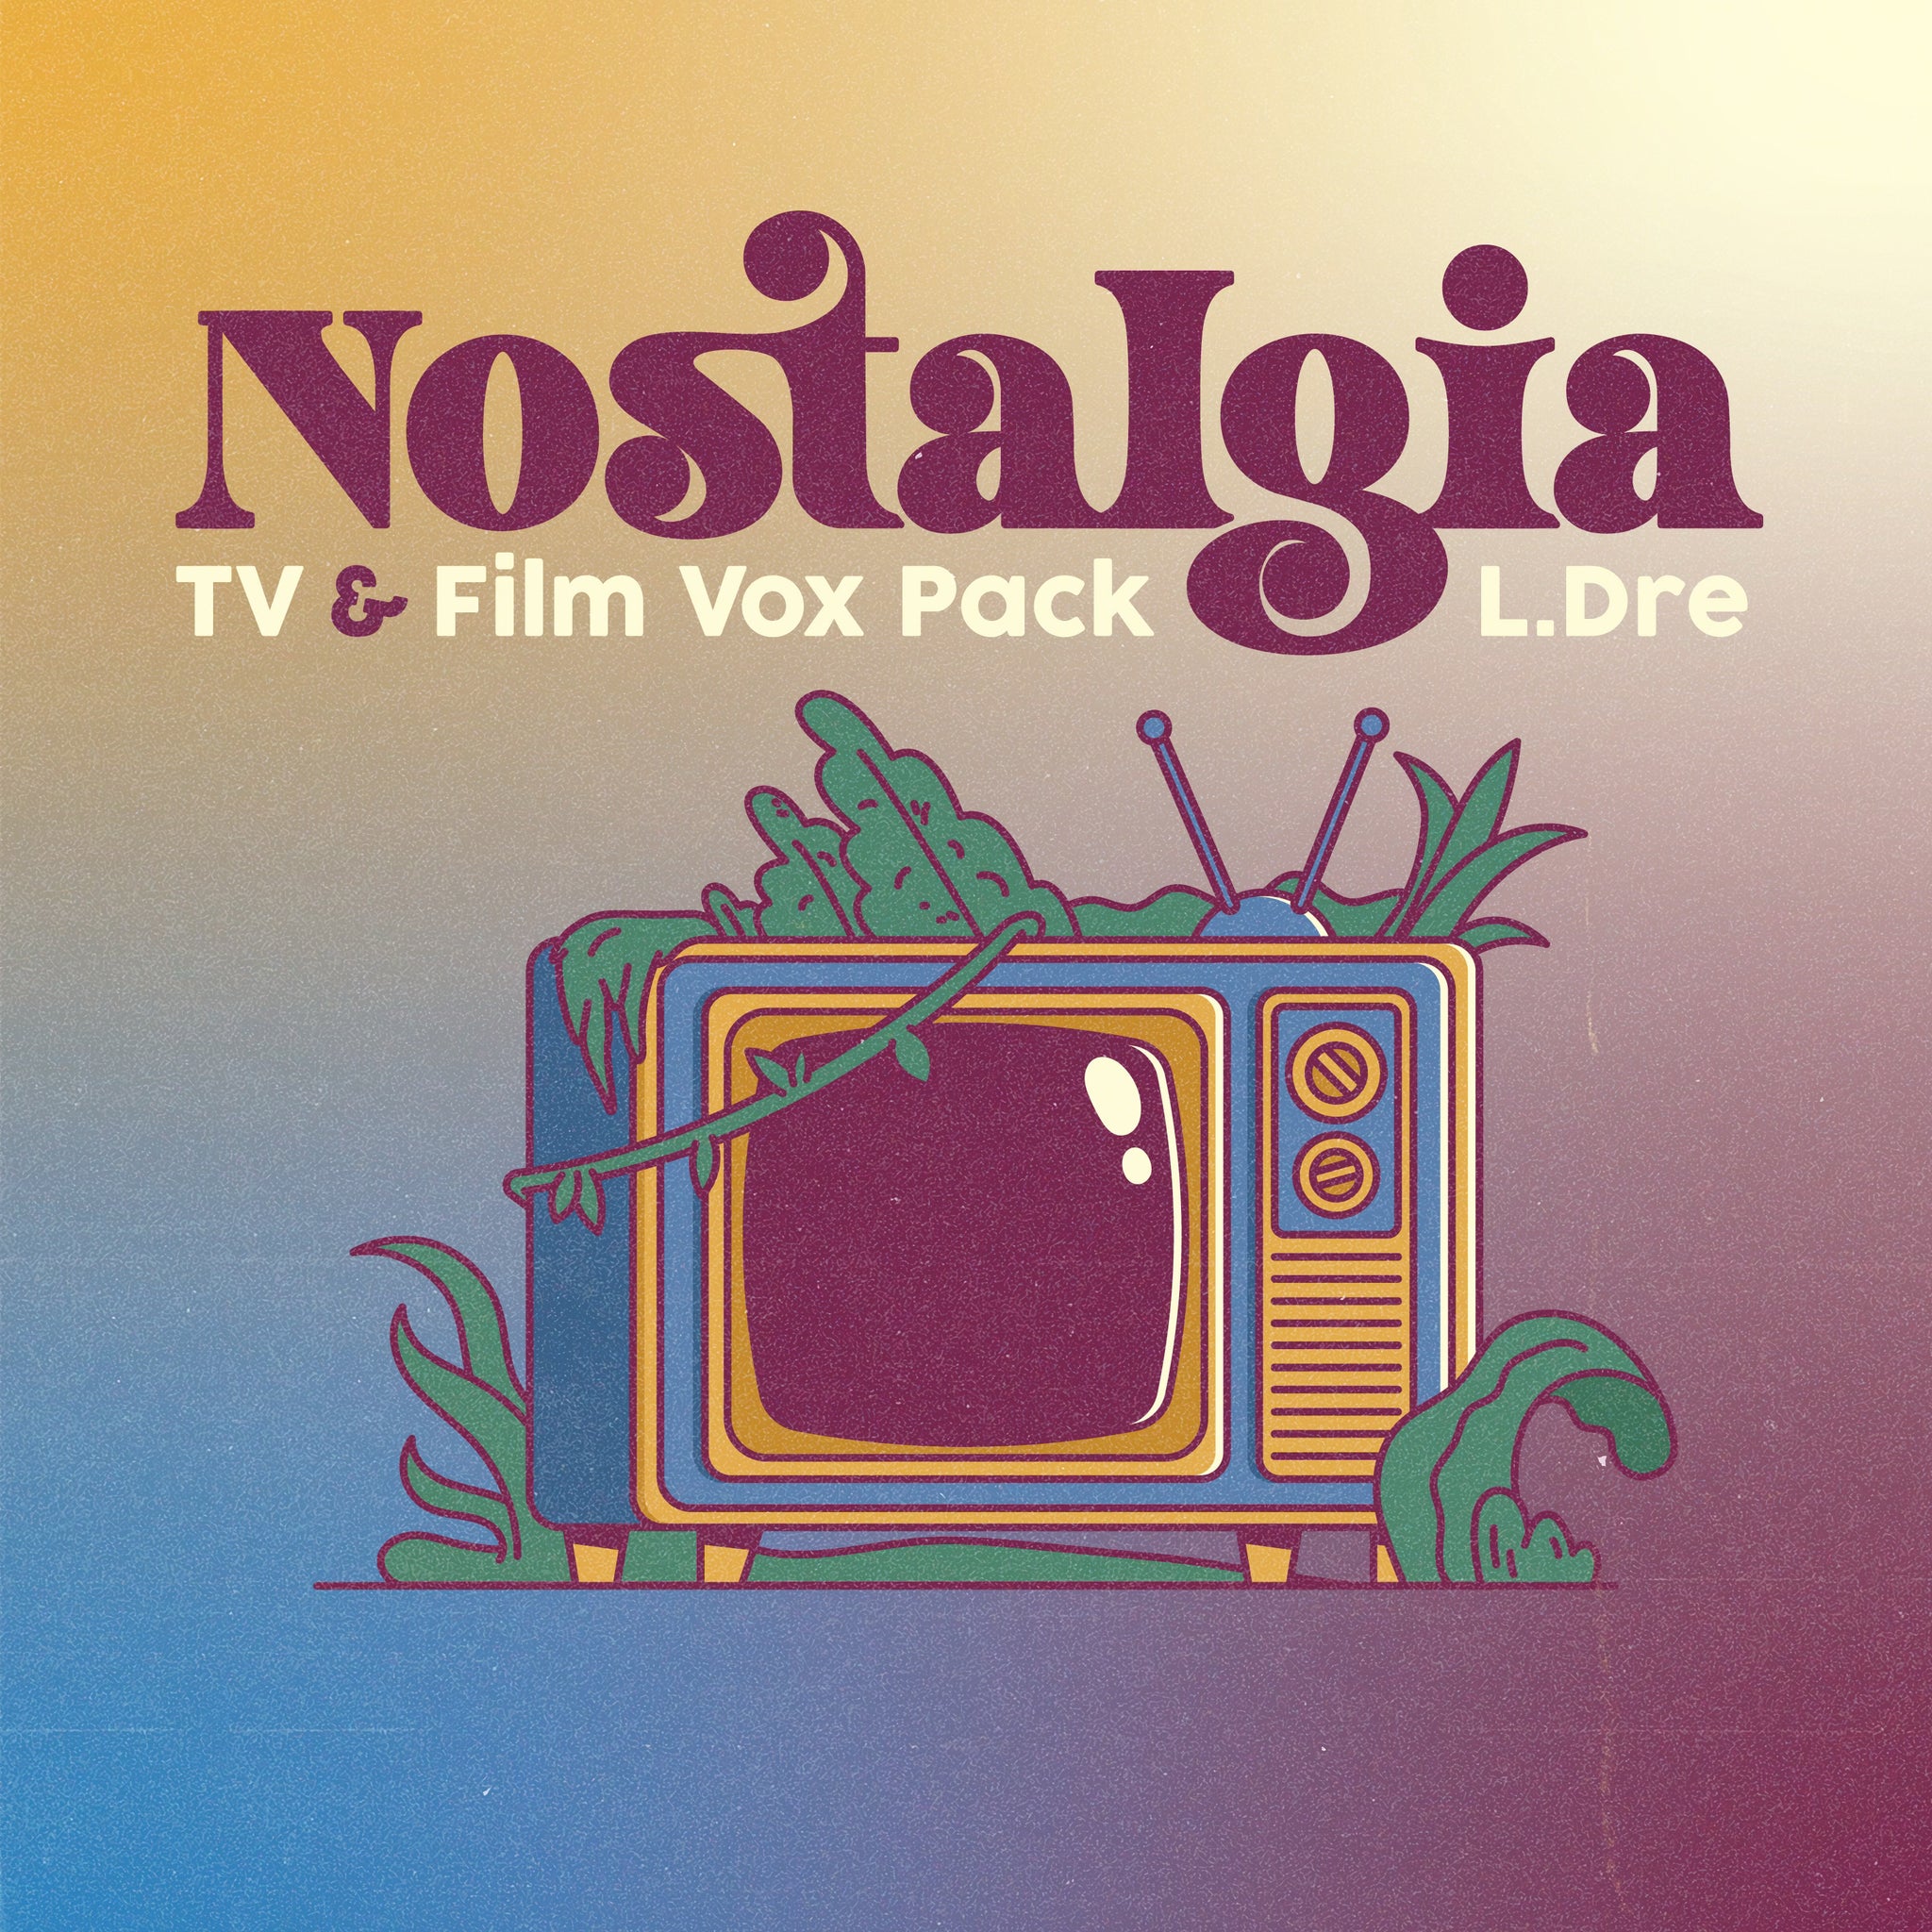 L.Dre - Nostalgia TV & Film Vox Pack - Prod. By L.Dre